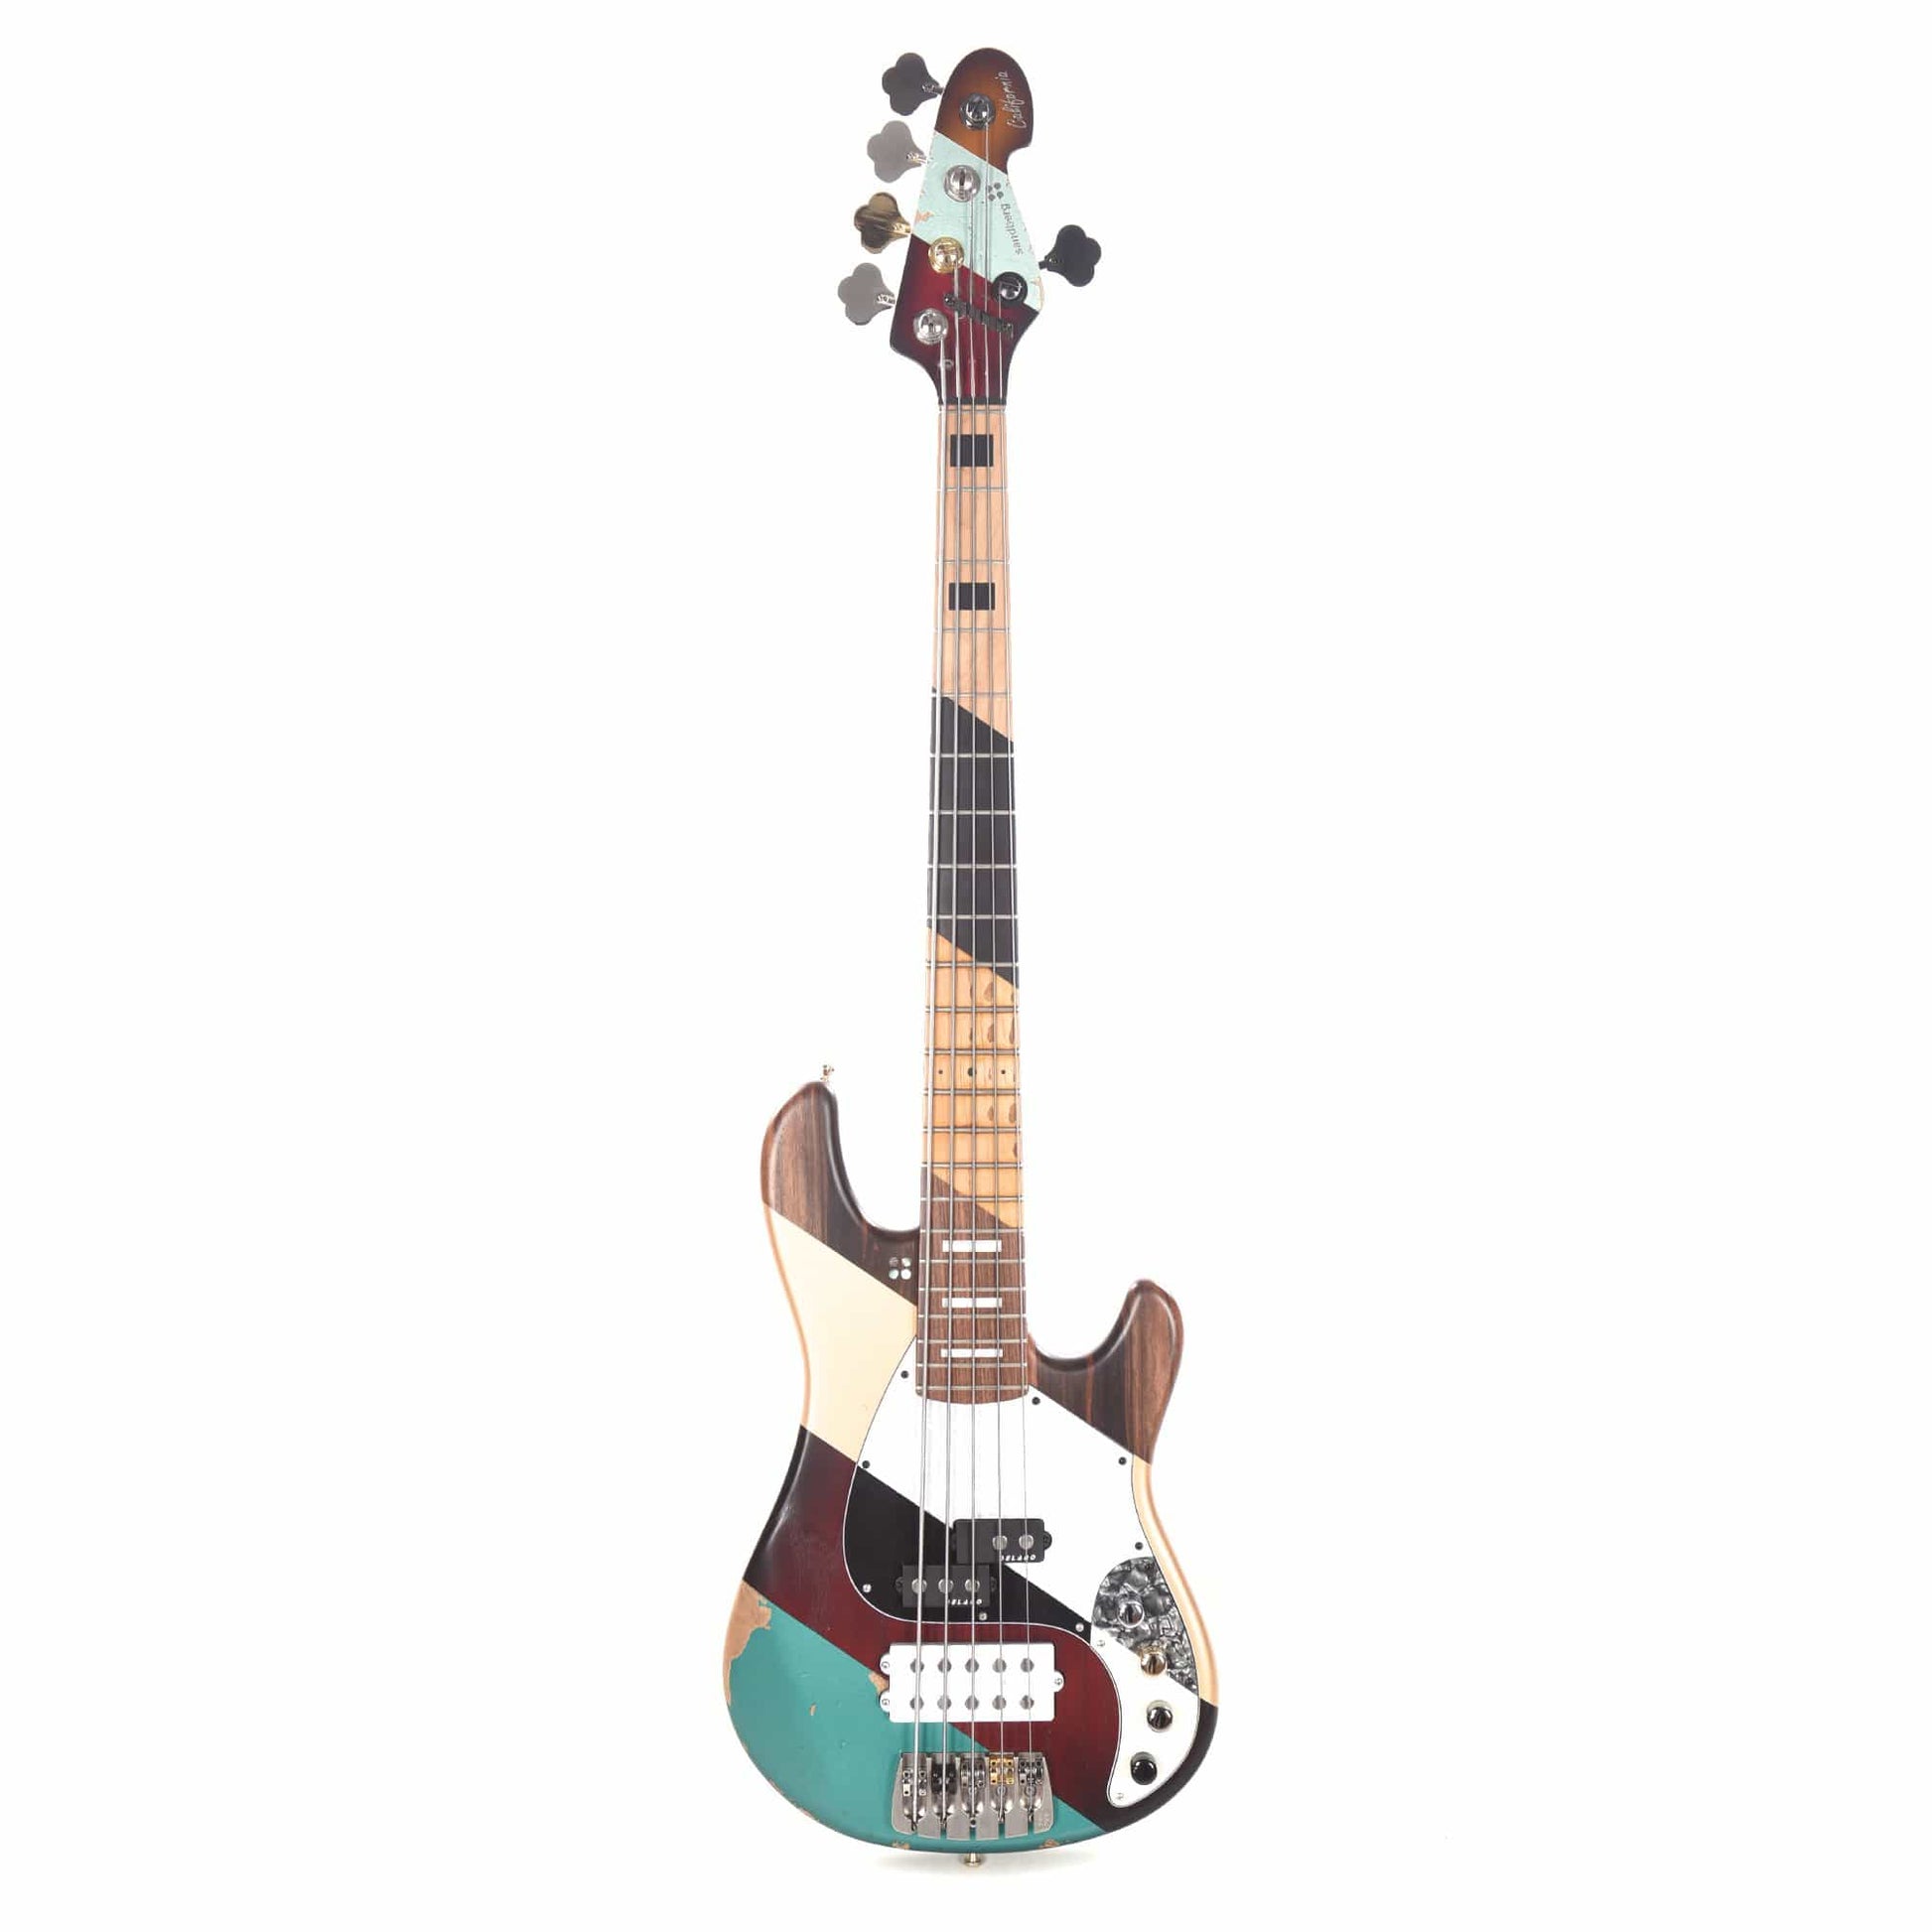 Sandberg VM5 Patchwork Bass NAMM 2020 Bass Guitars / 5-String or More